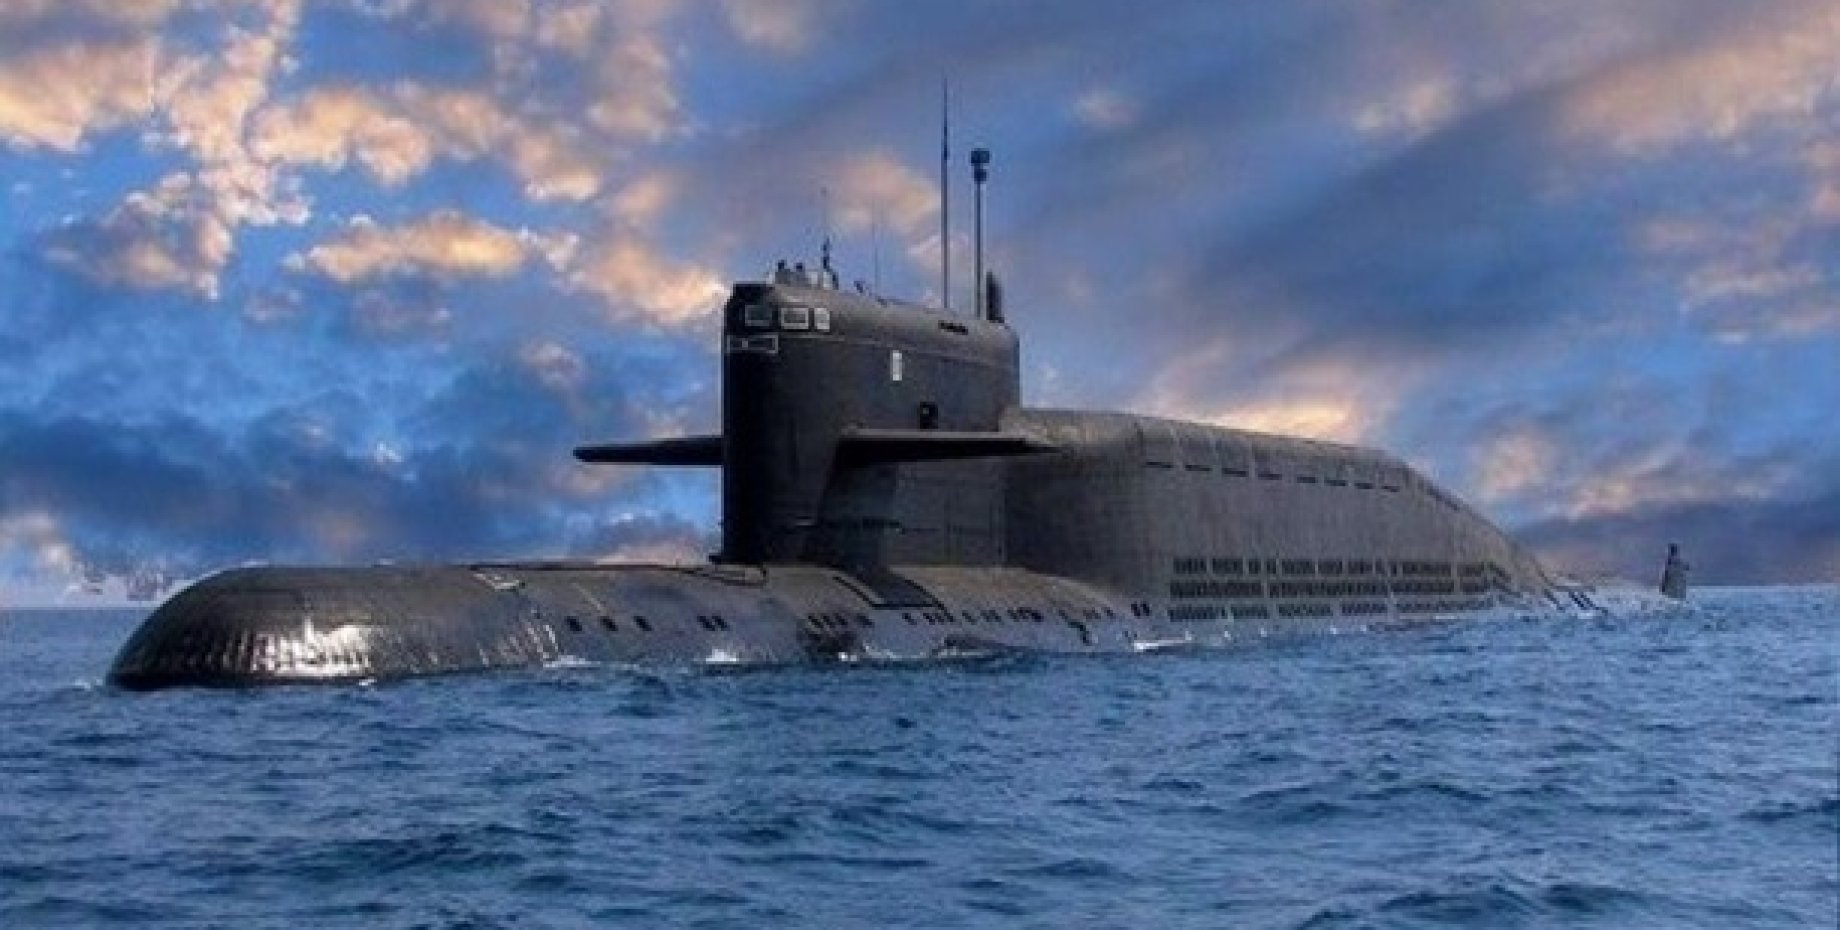 Пл ка. Подводная лодка 667бдрм "Дельфин". Подводная лодка 667бдр кальмар. АПЛ 667 БДР. 667 БДРМ подводная лодка.